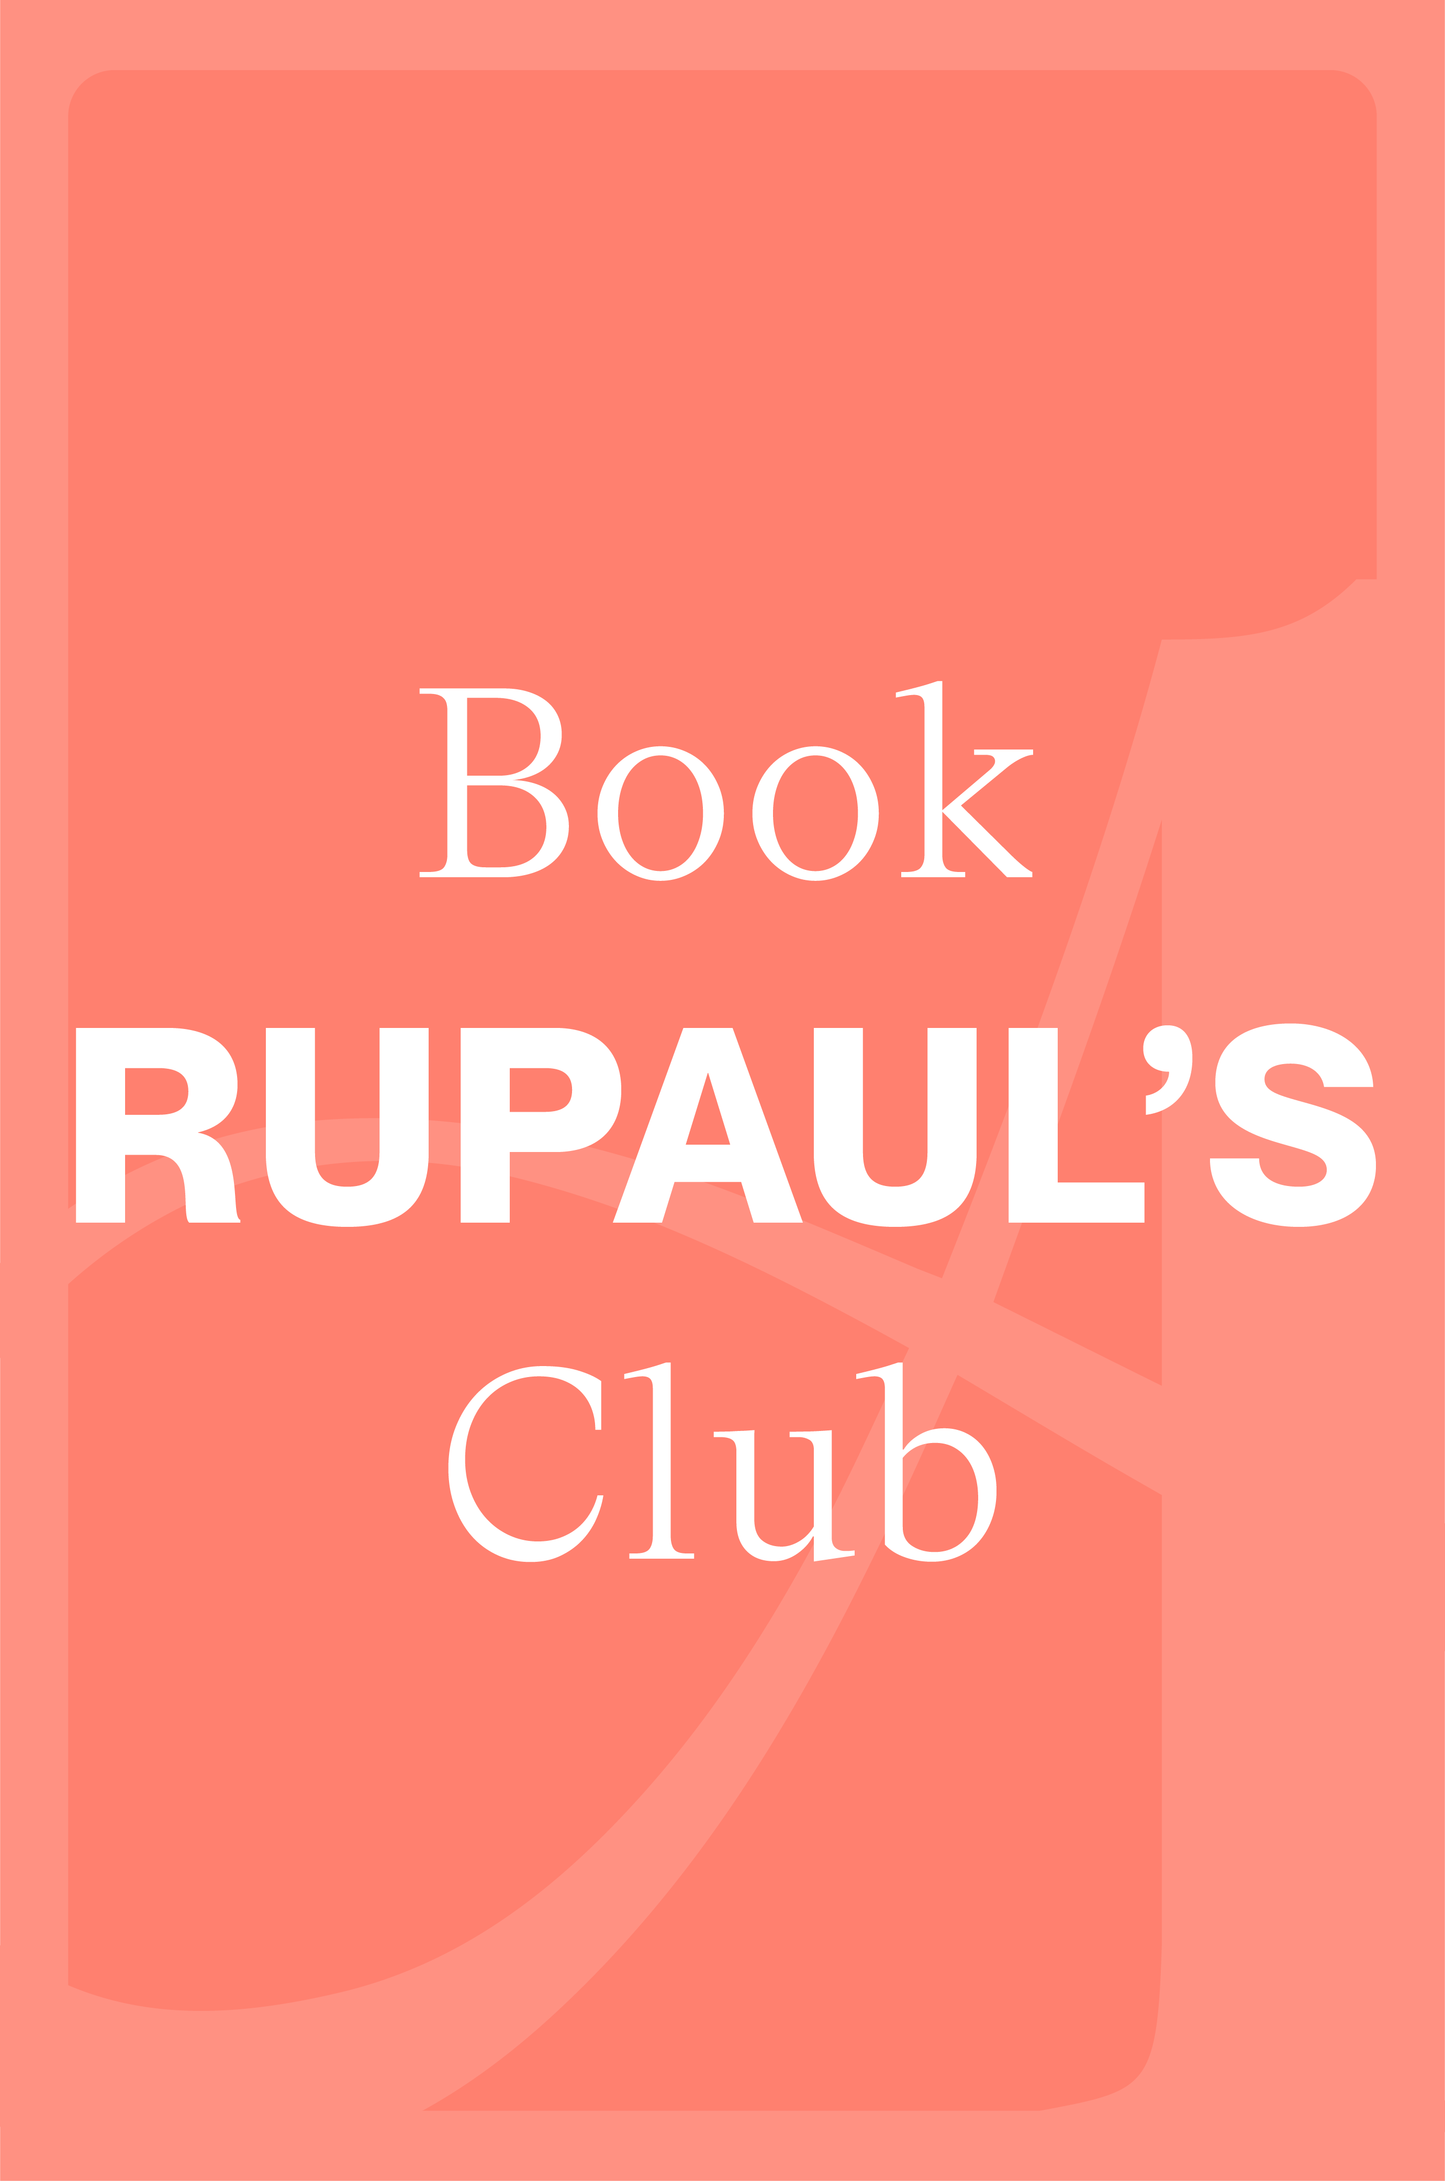 RuPaul's Book Club